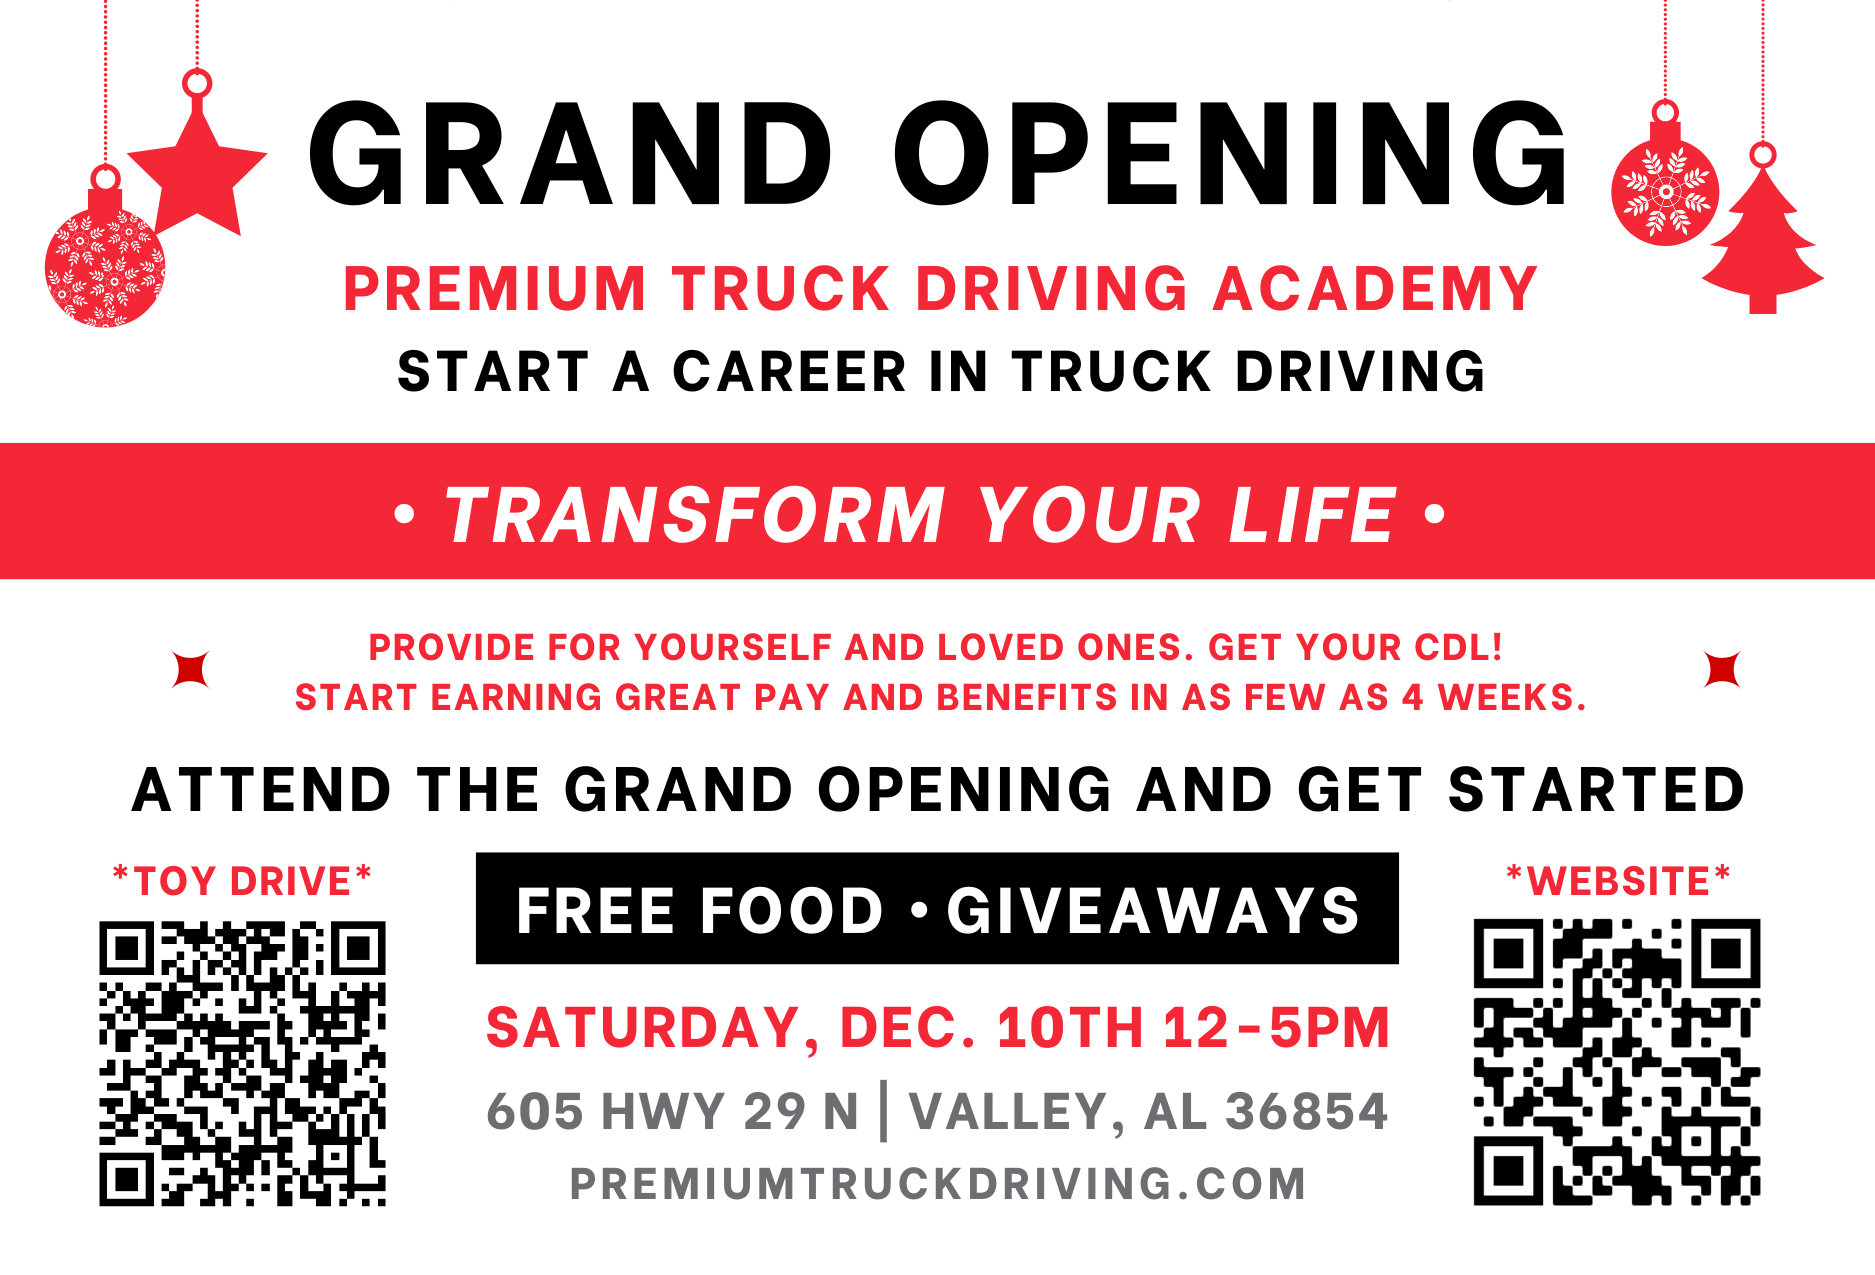 Grand Opening_Premium Truck Driving Academy